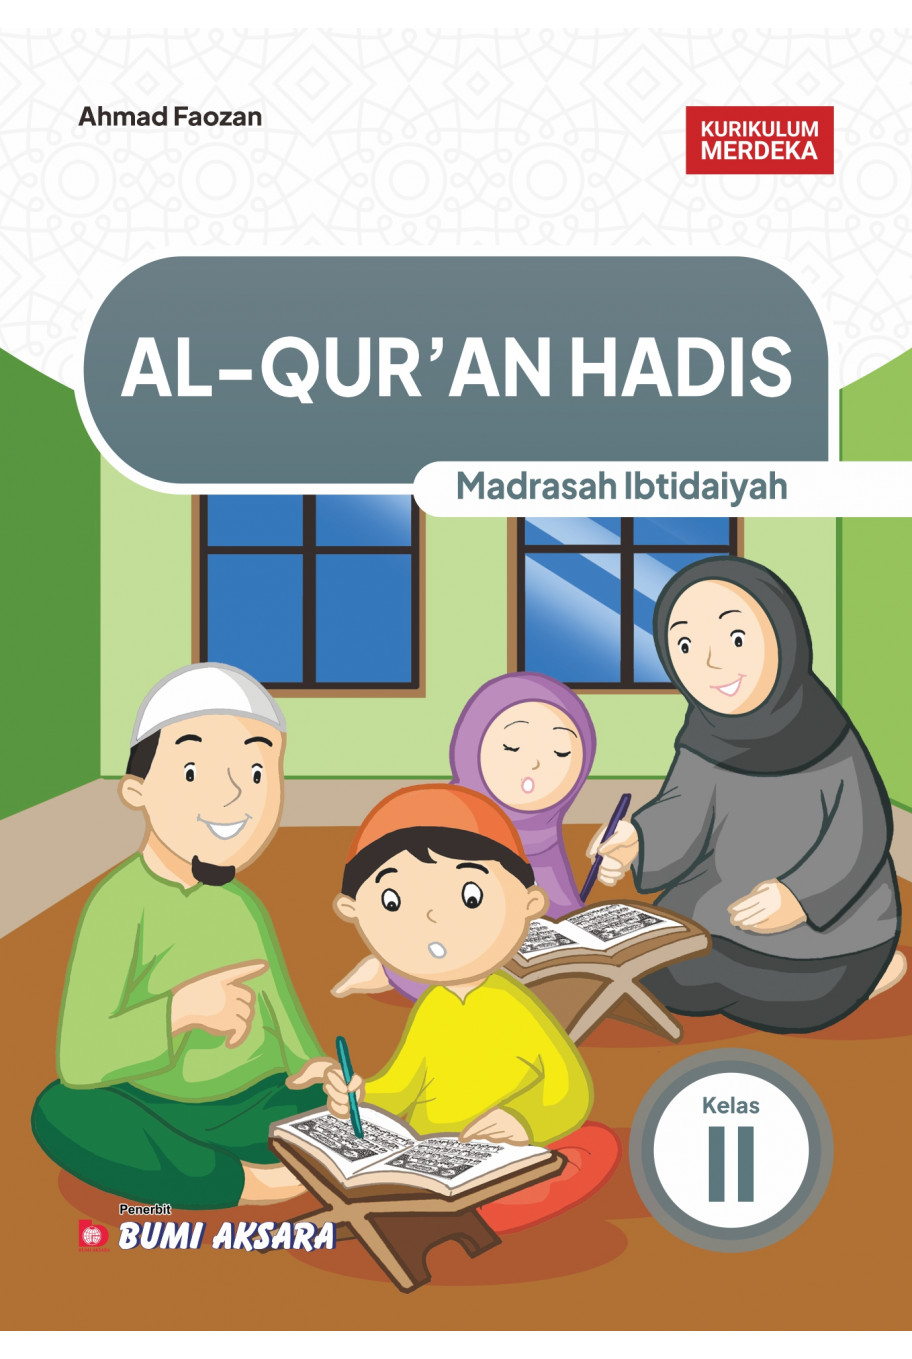 Al-Qur'an Hadis Madrasah Ibtidaiyah Kelas II